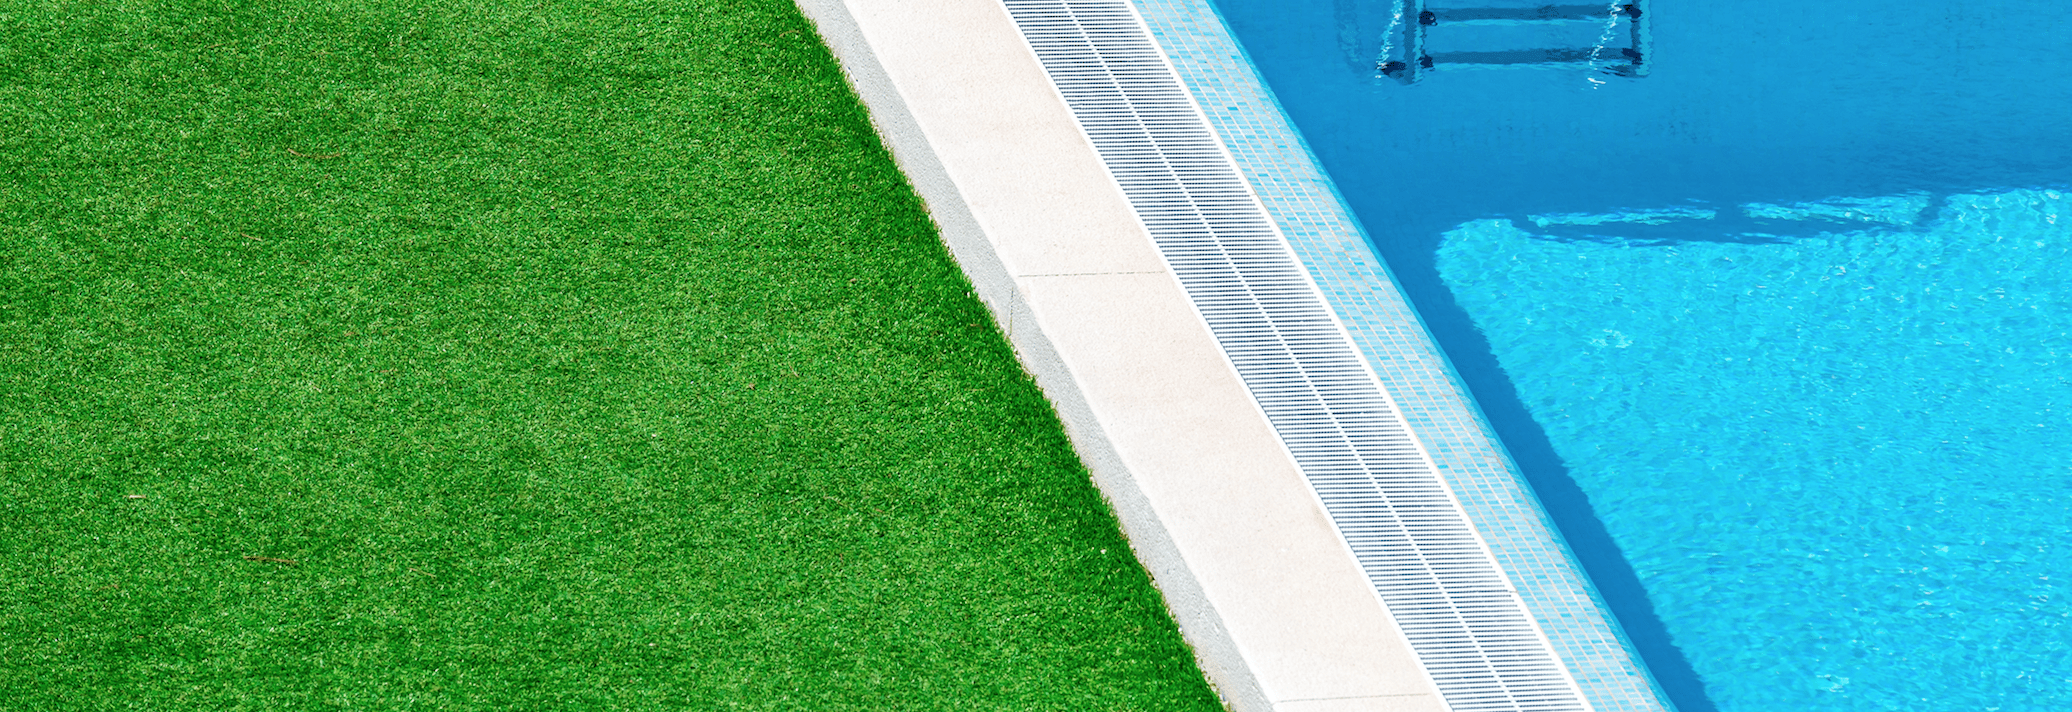 Grass next to pool